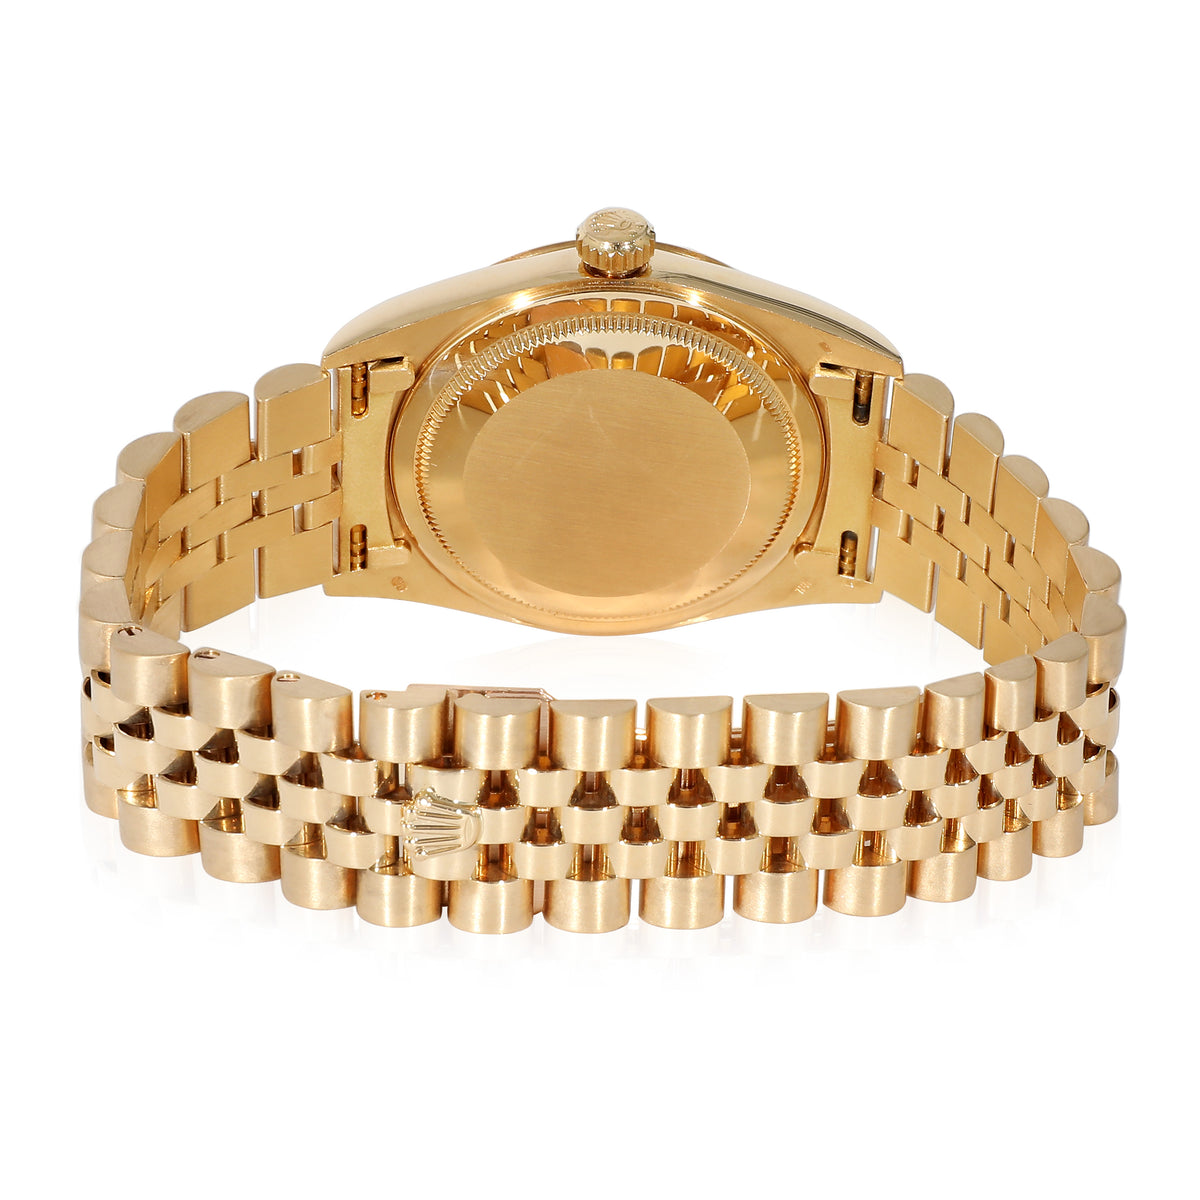 Rolex Datejust 16238 Men's Watch in 18k Yellow Gold